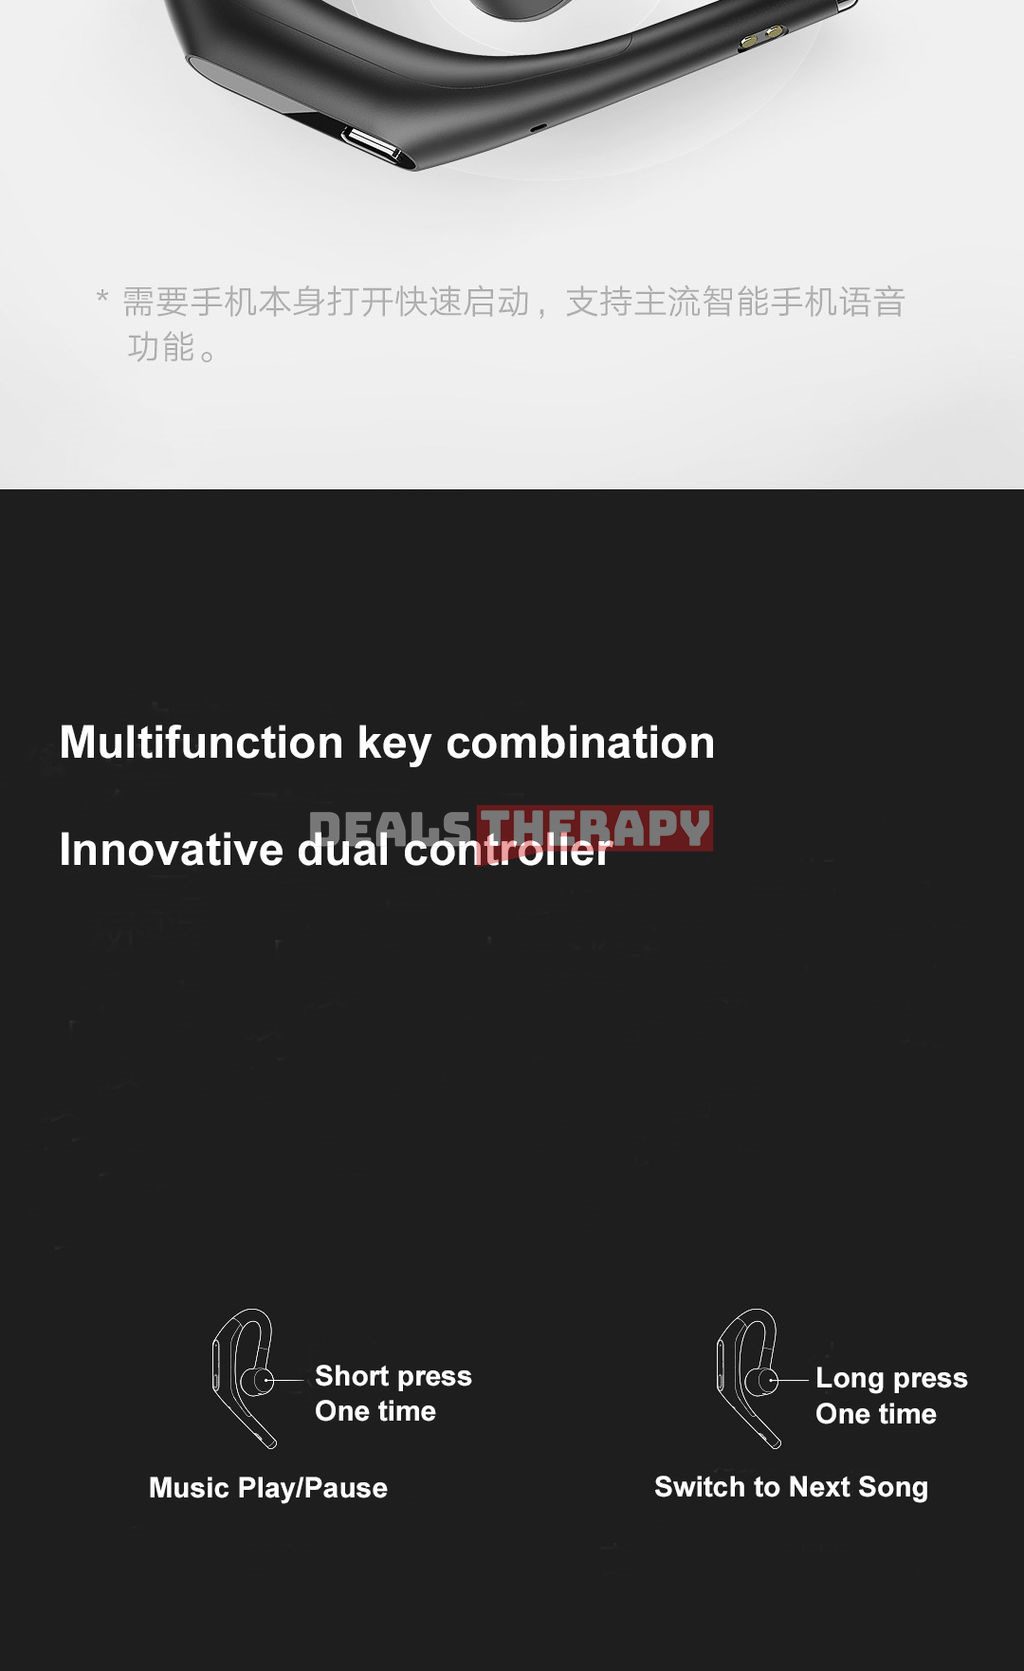 Xiaomi Bluetooth Headset Pro